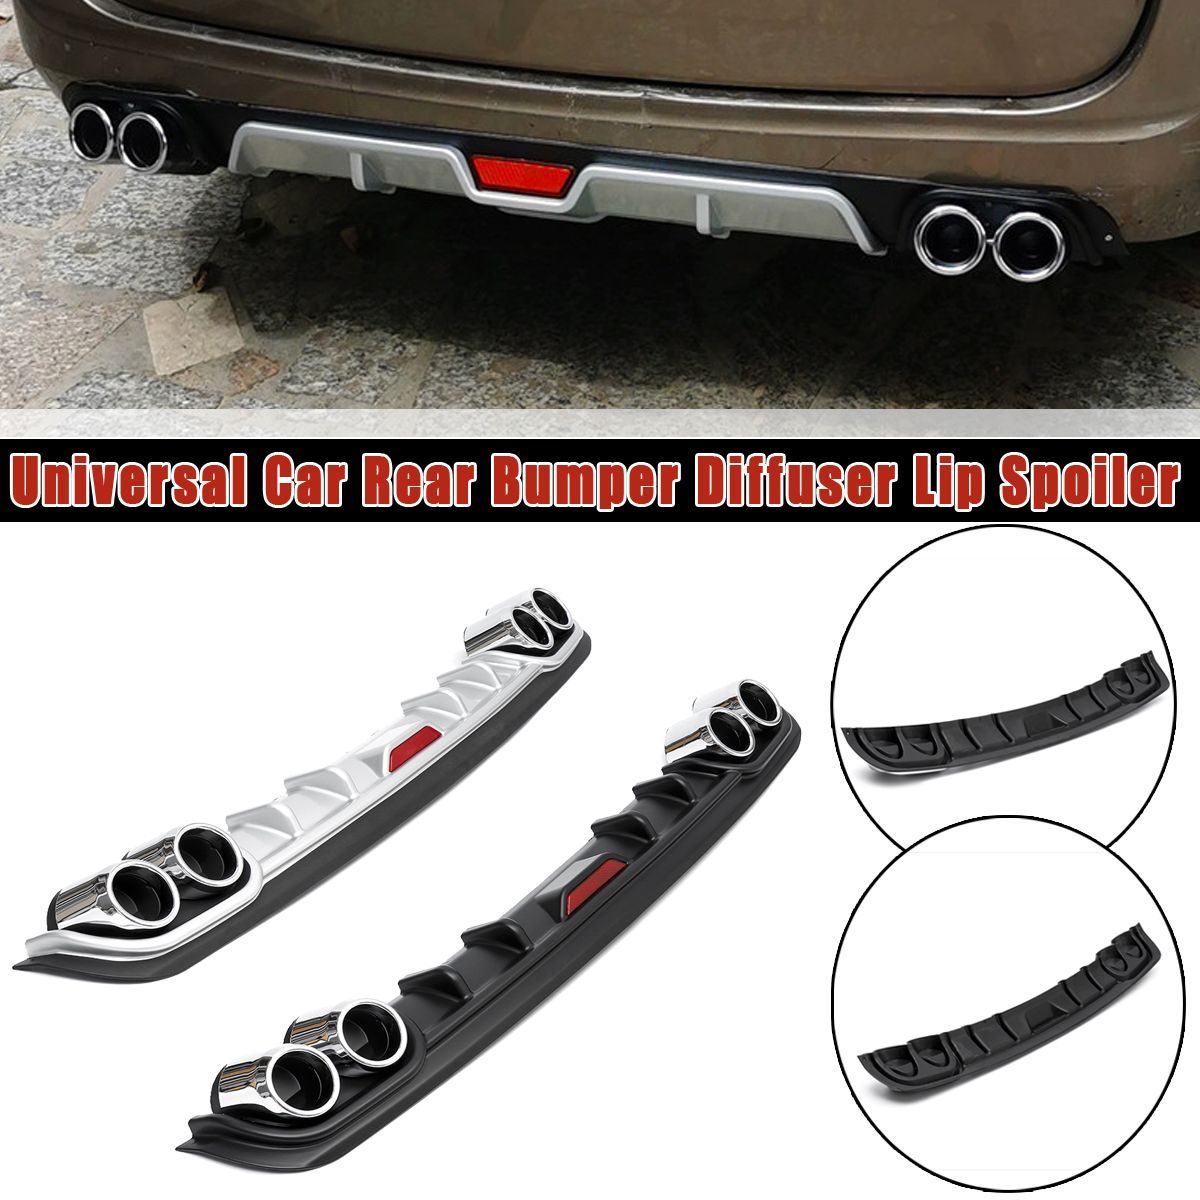 Universal-Car-Rear-Bumper-Diffuser-Lip-Spoiler-Canard-Direct-Adhesive-B-Type-1614913